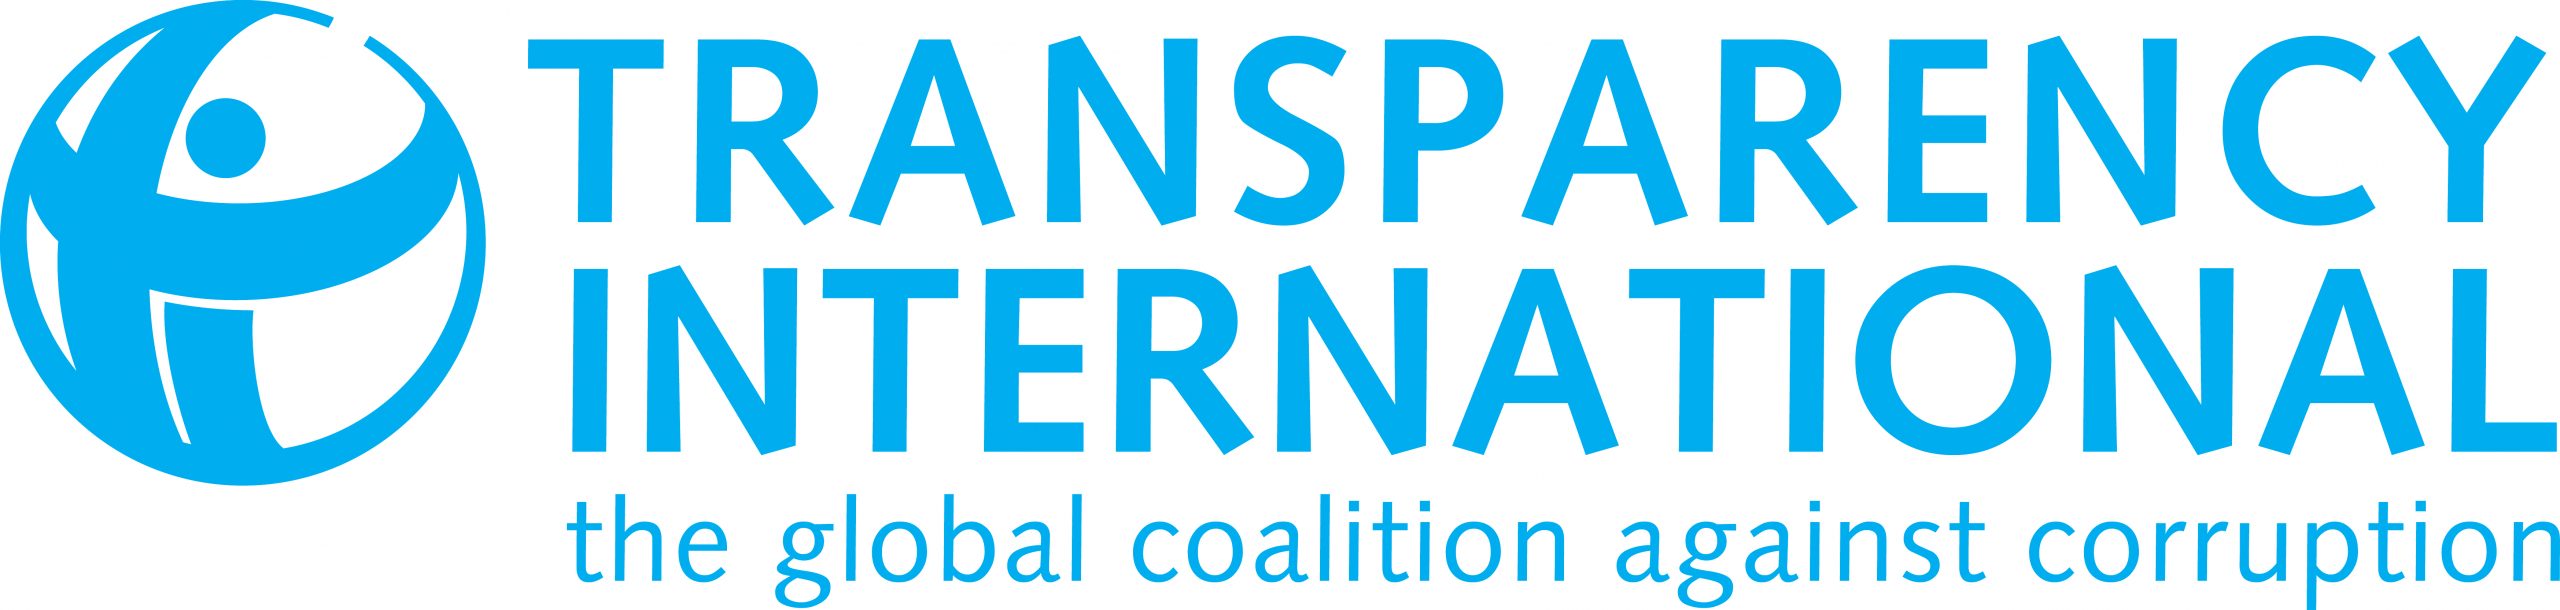 Transperency International